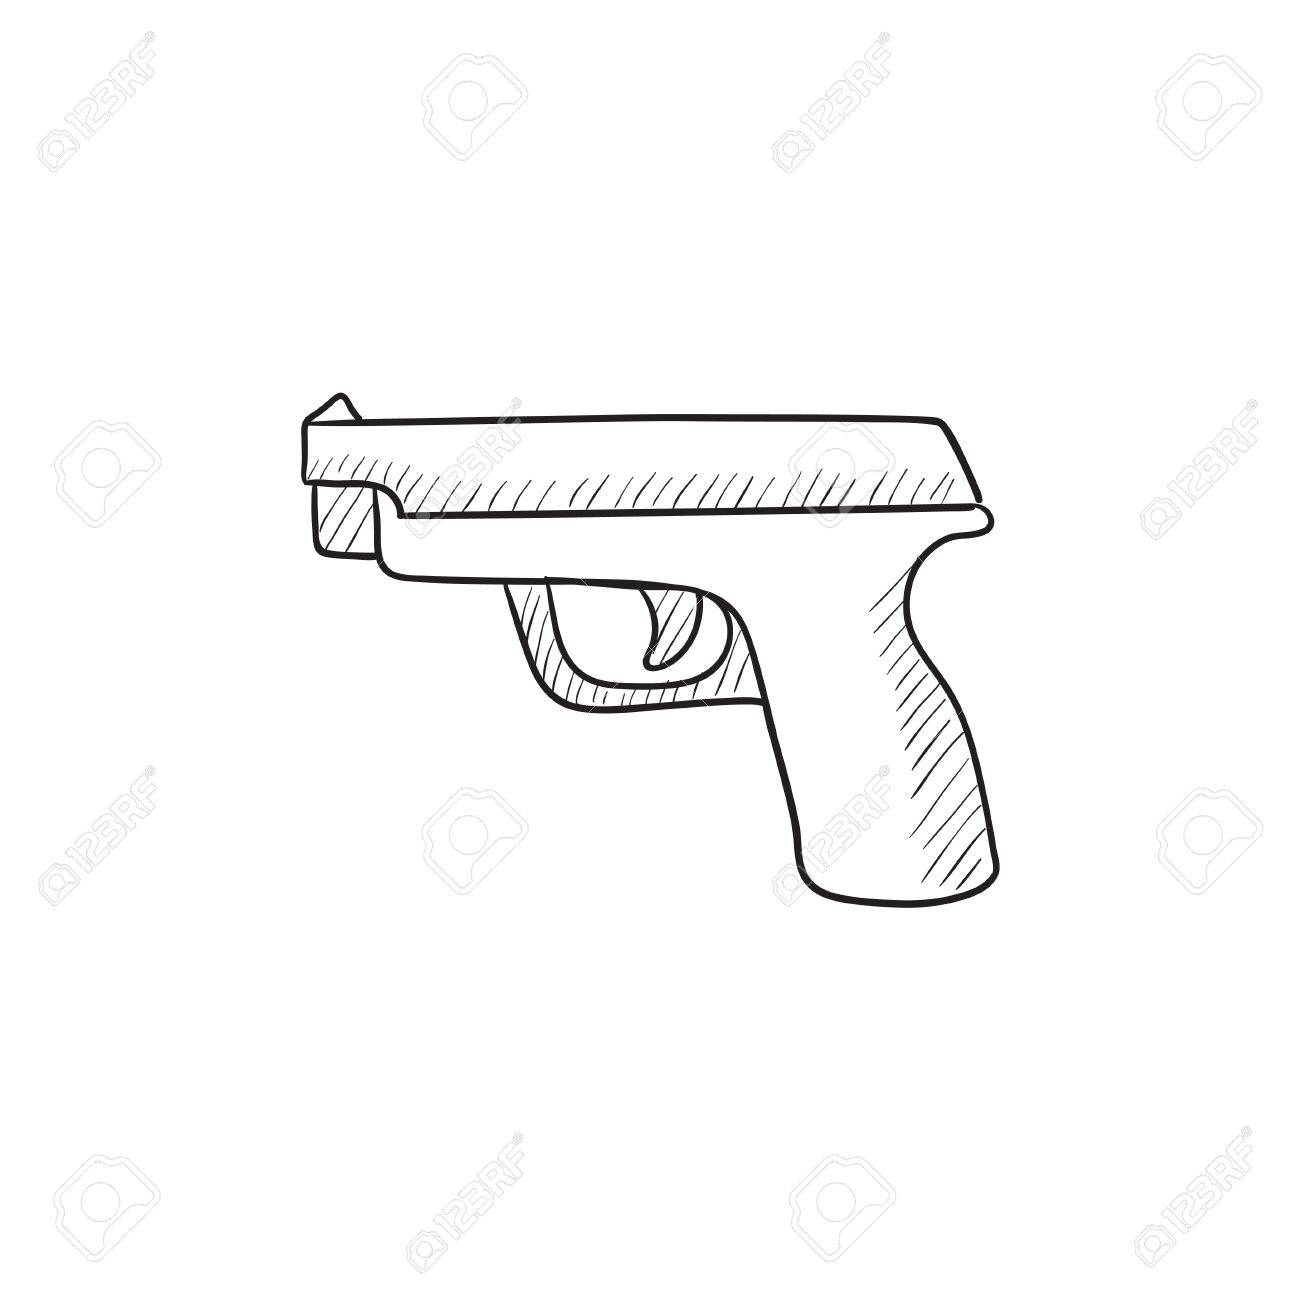 Handgun Vector Sketch Icon Isolated On Background. Hand Drawn 